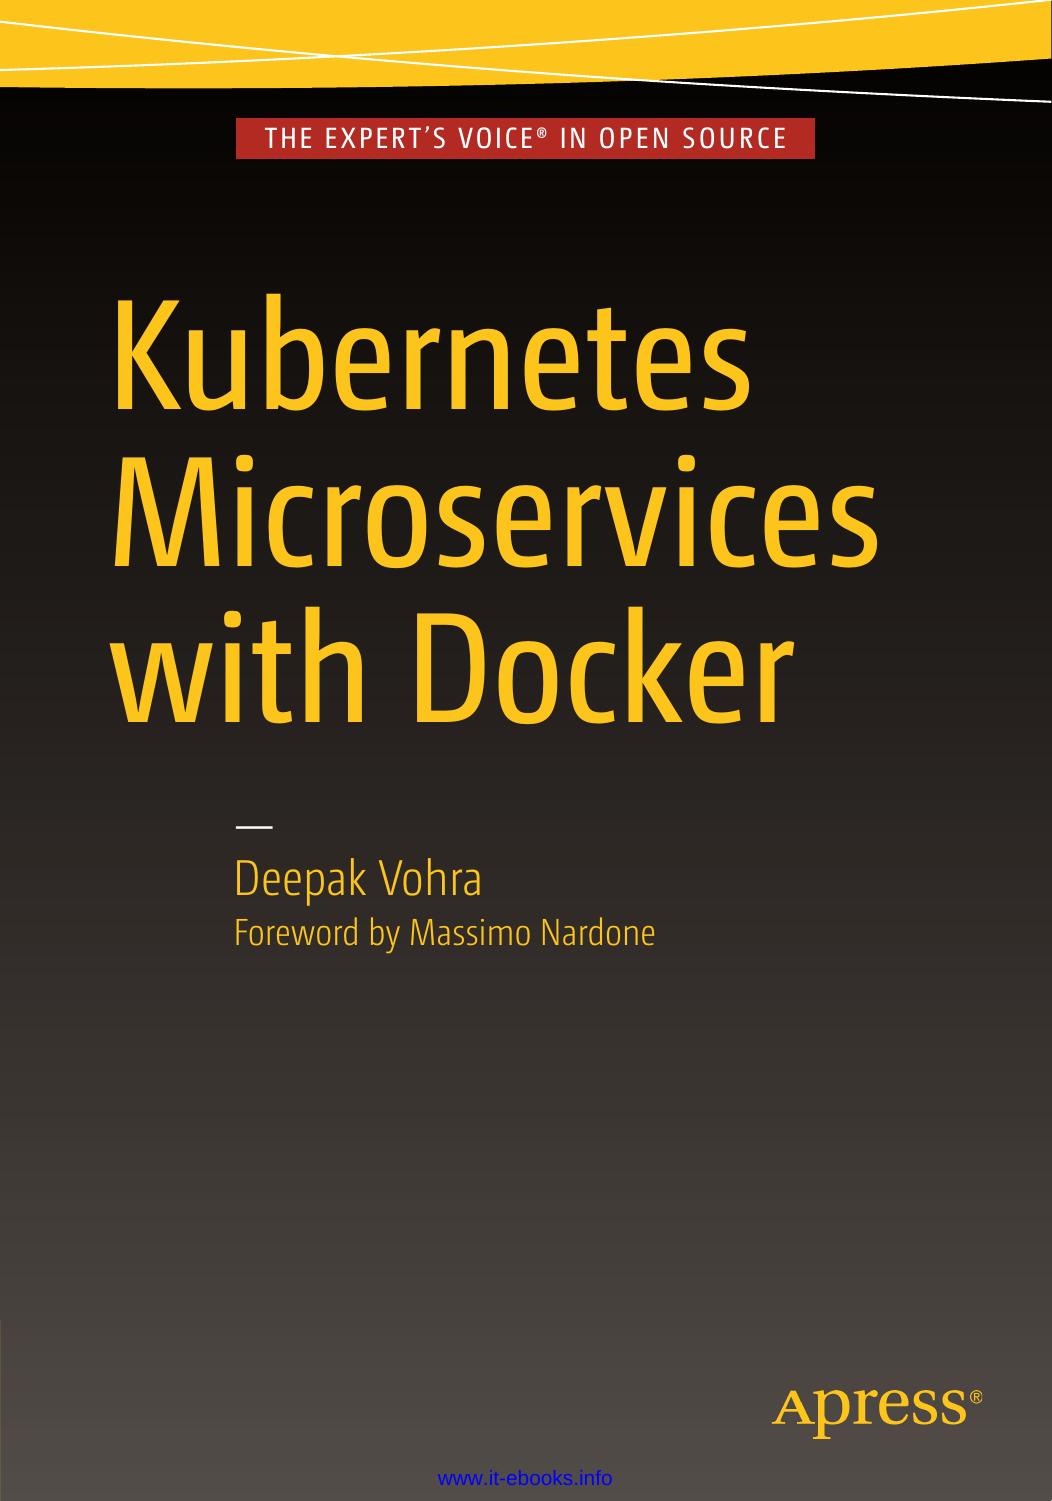 Kubernetes Microservices with Docker by Deepak Vohra (z-lib.org)